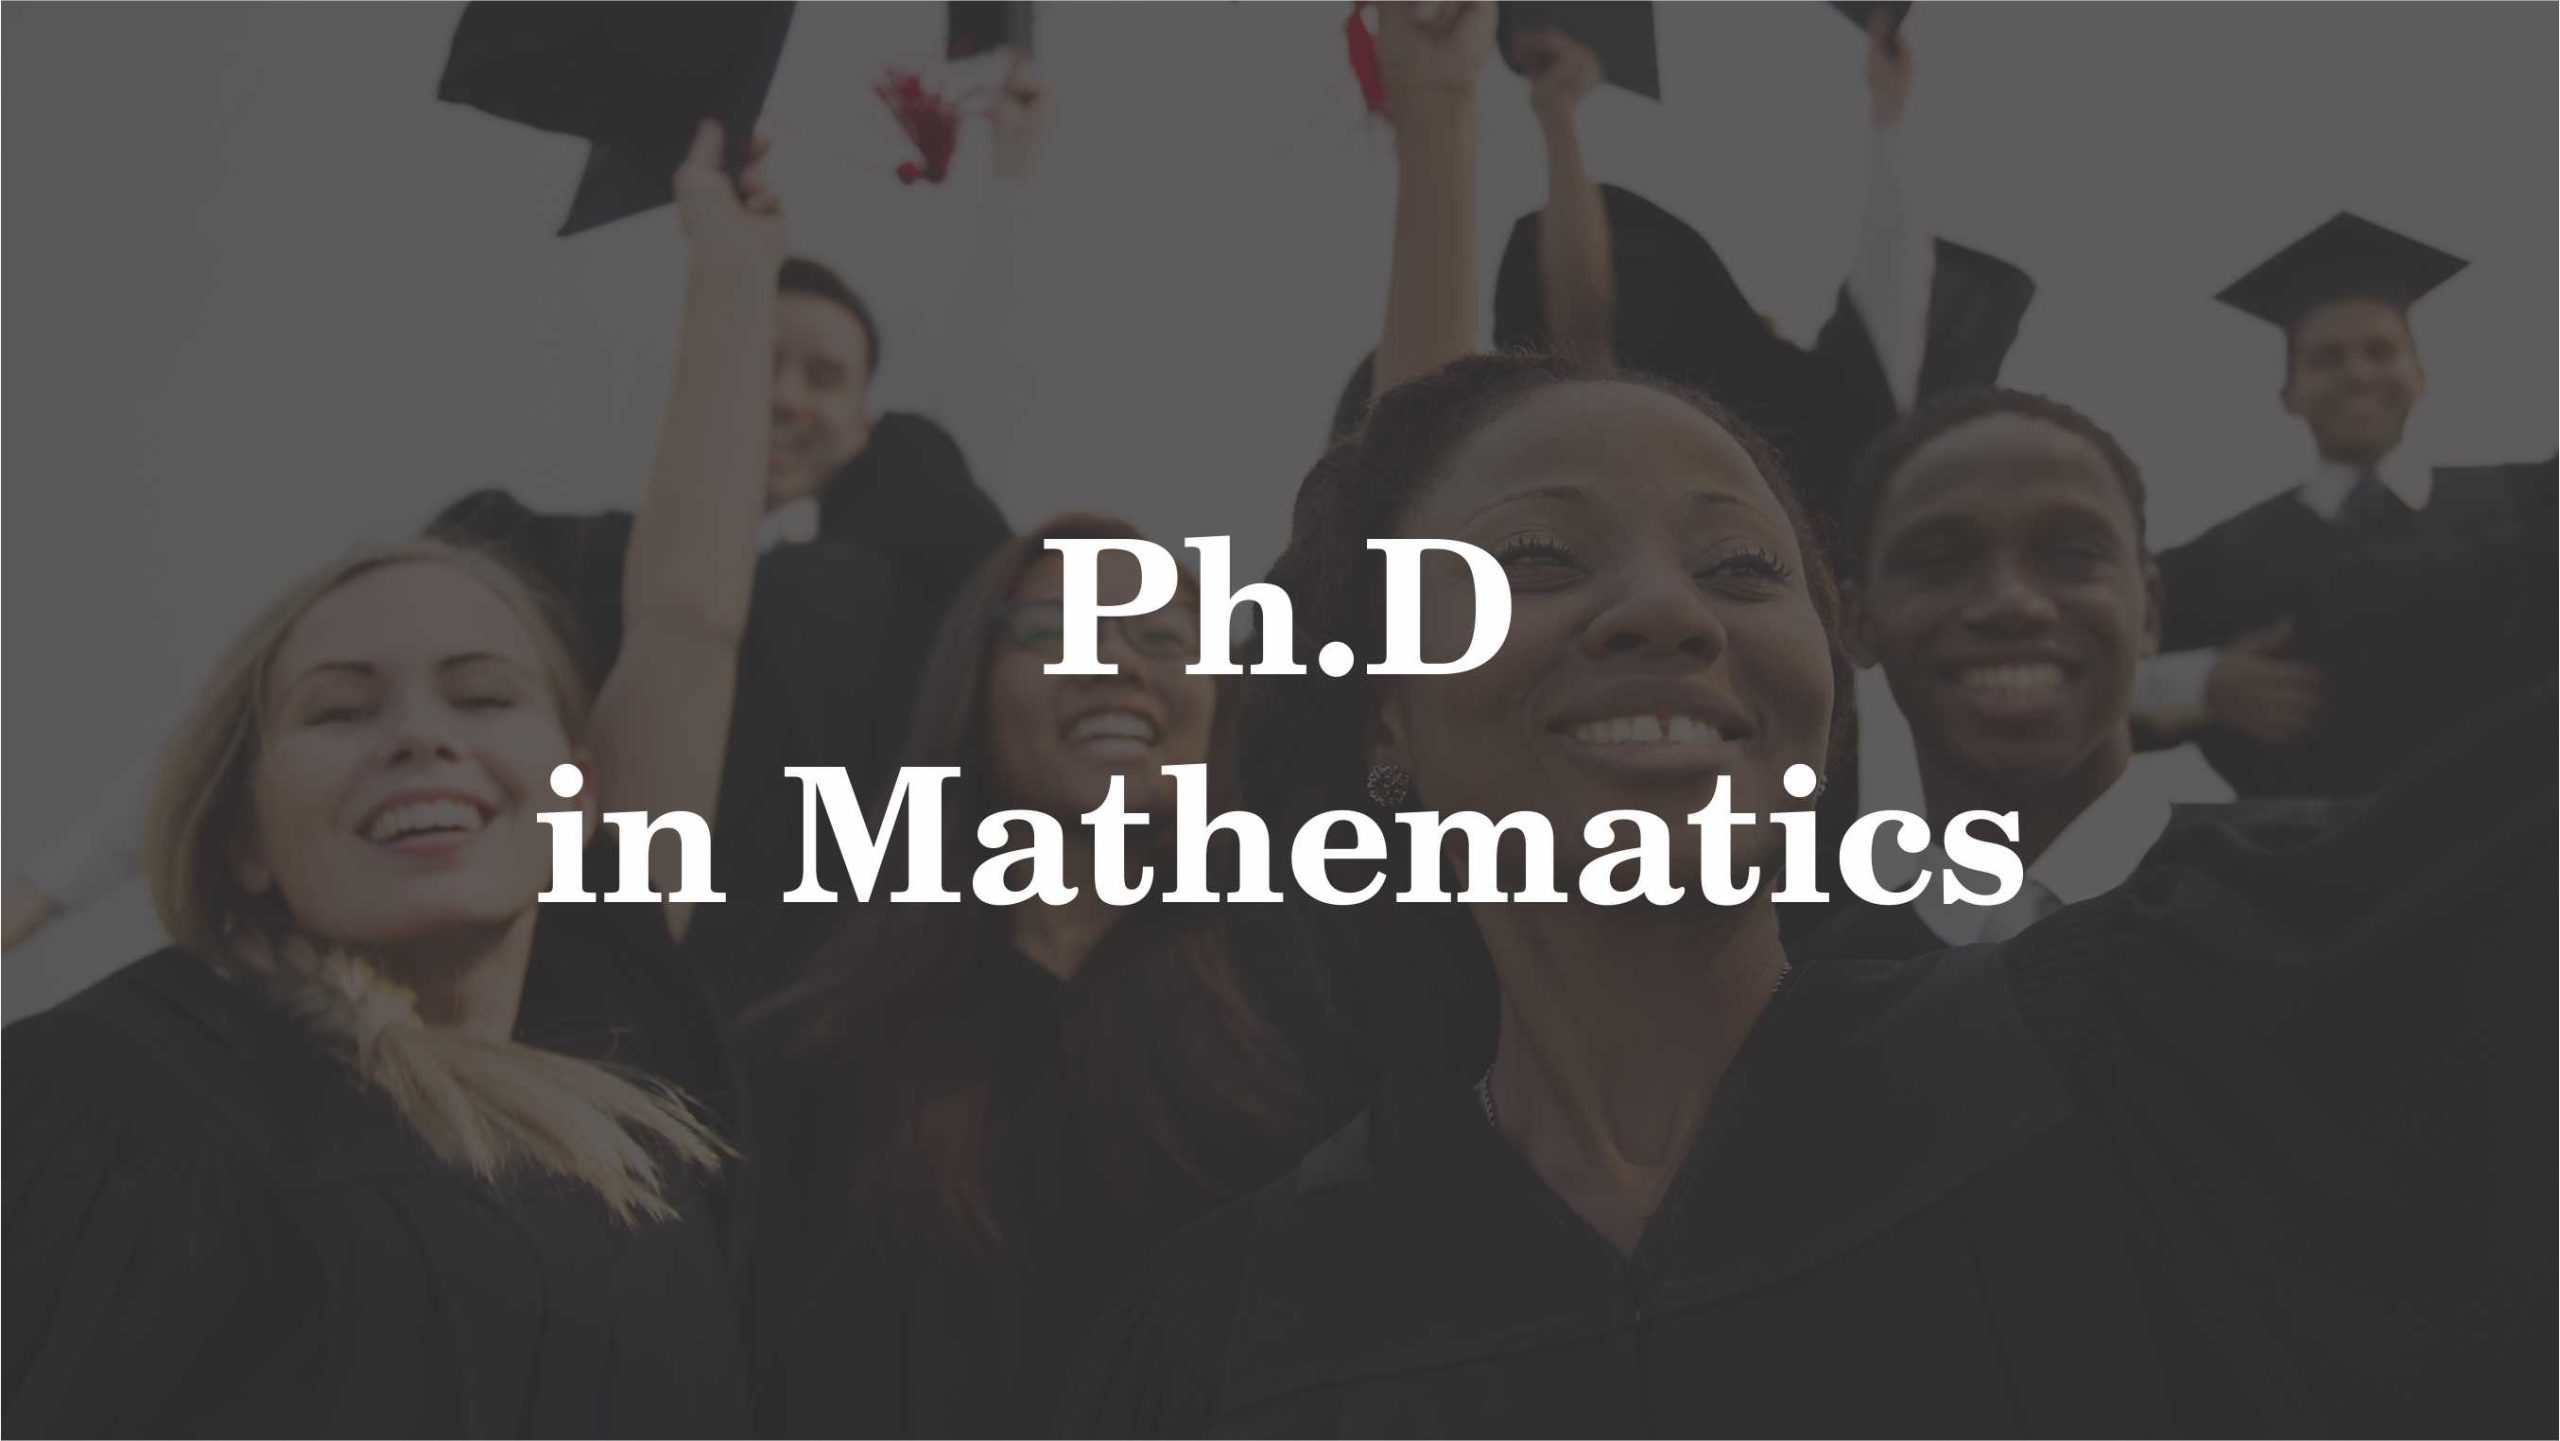 PhD in mathematics